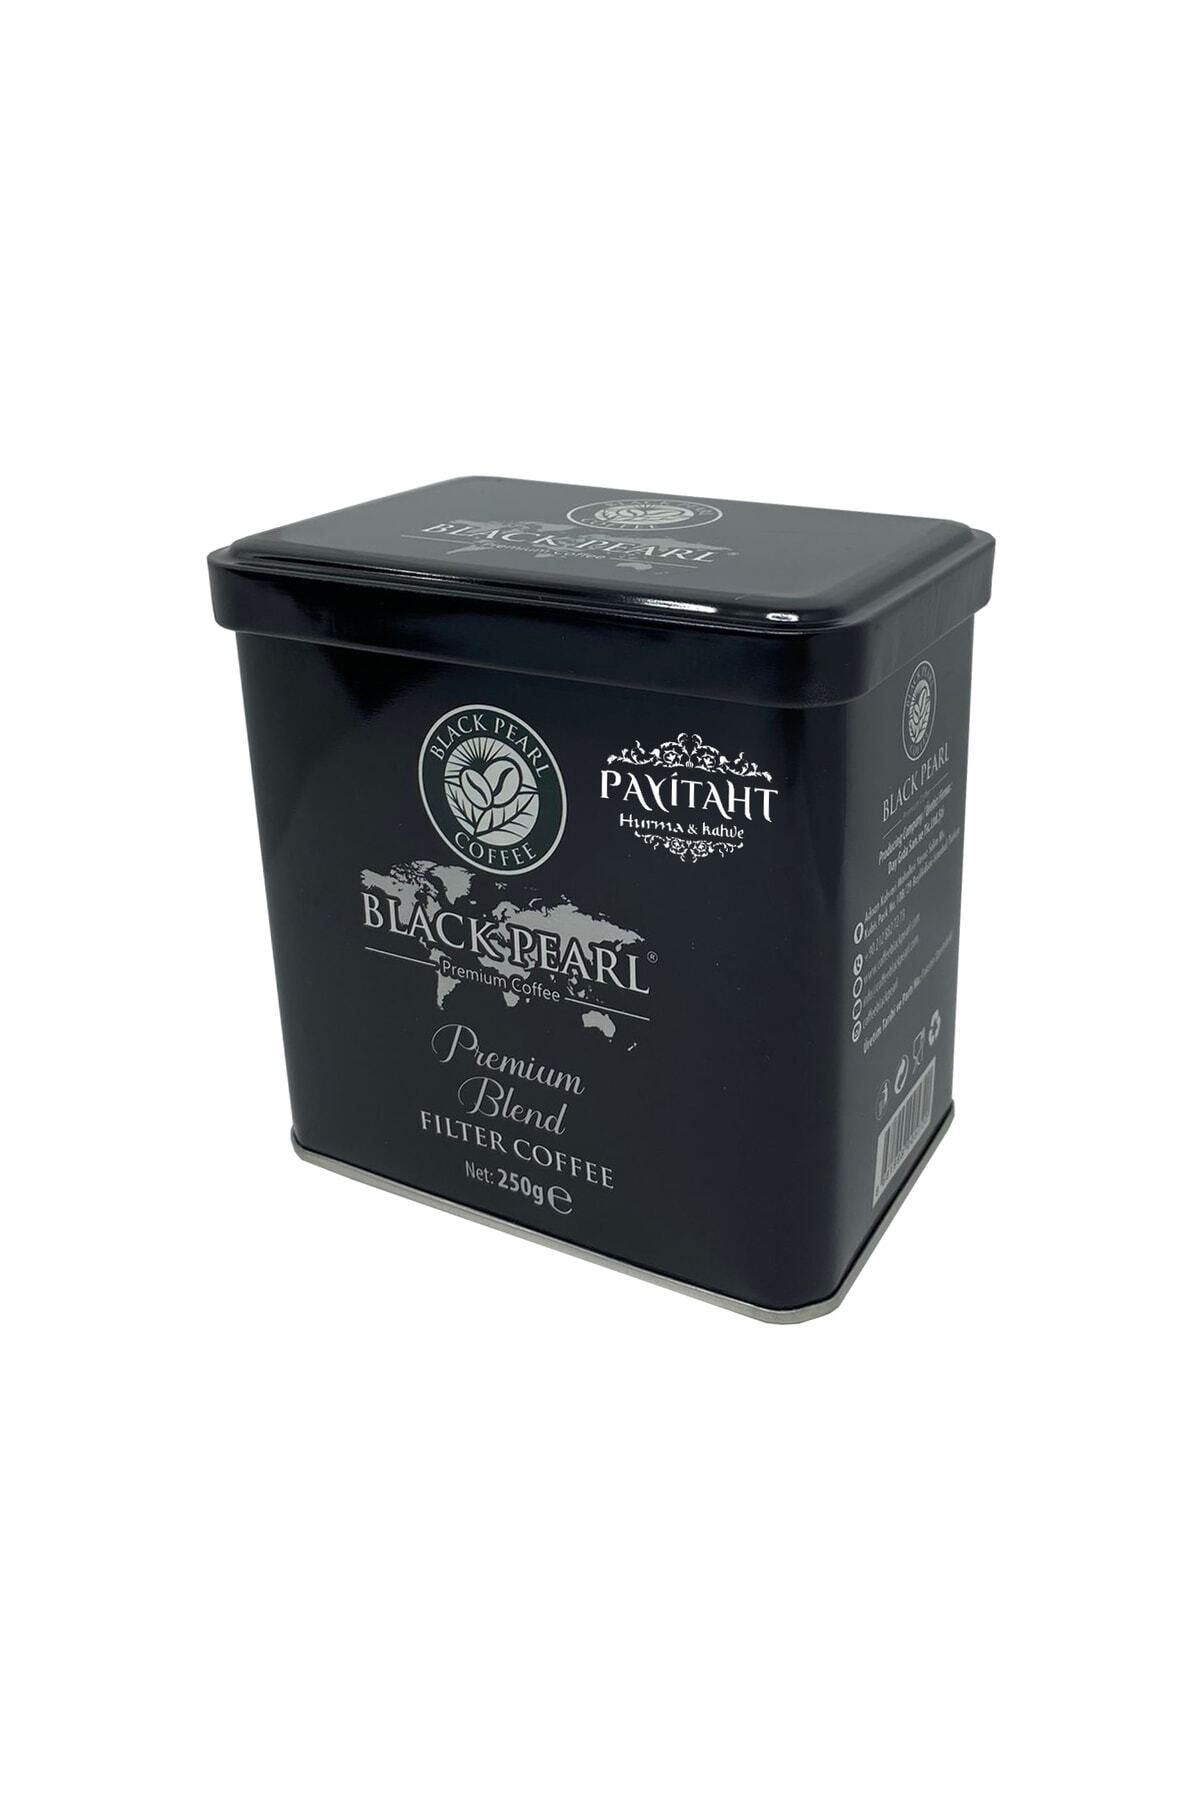 payitaht hurma Black Pearl - Premium Blend Filtre Kahve 250 gr